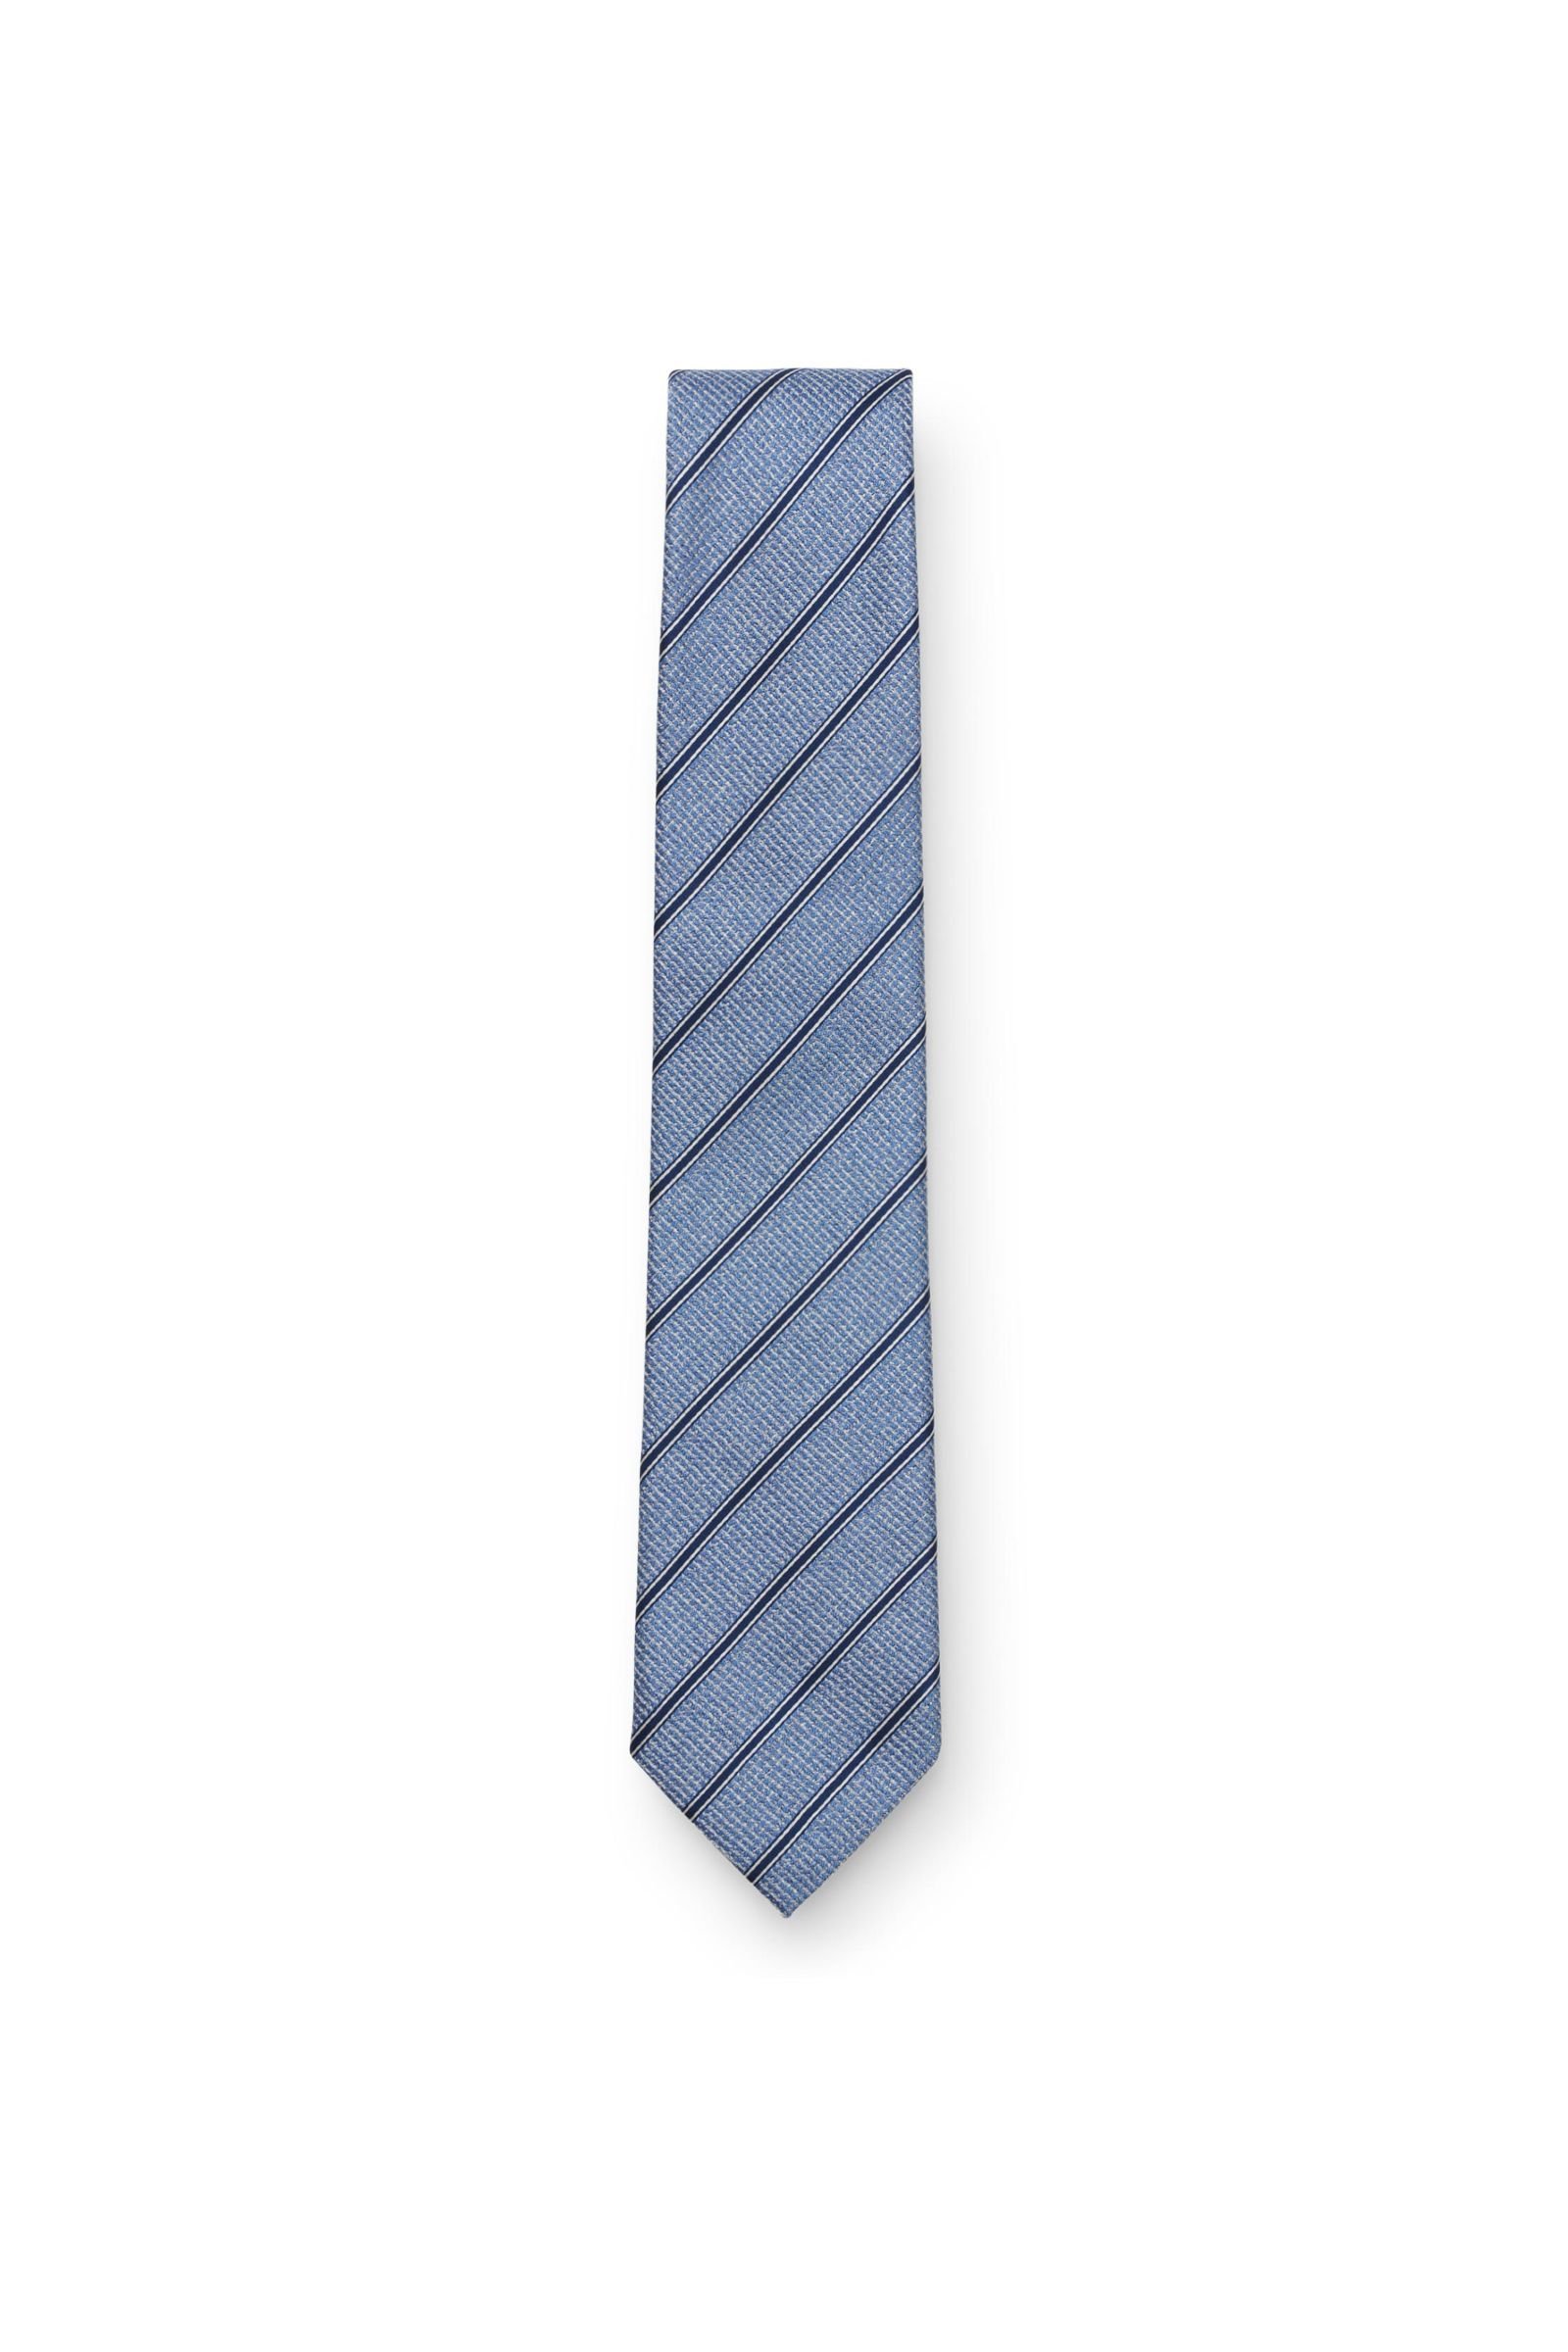 Silk tie light blue striped